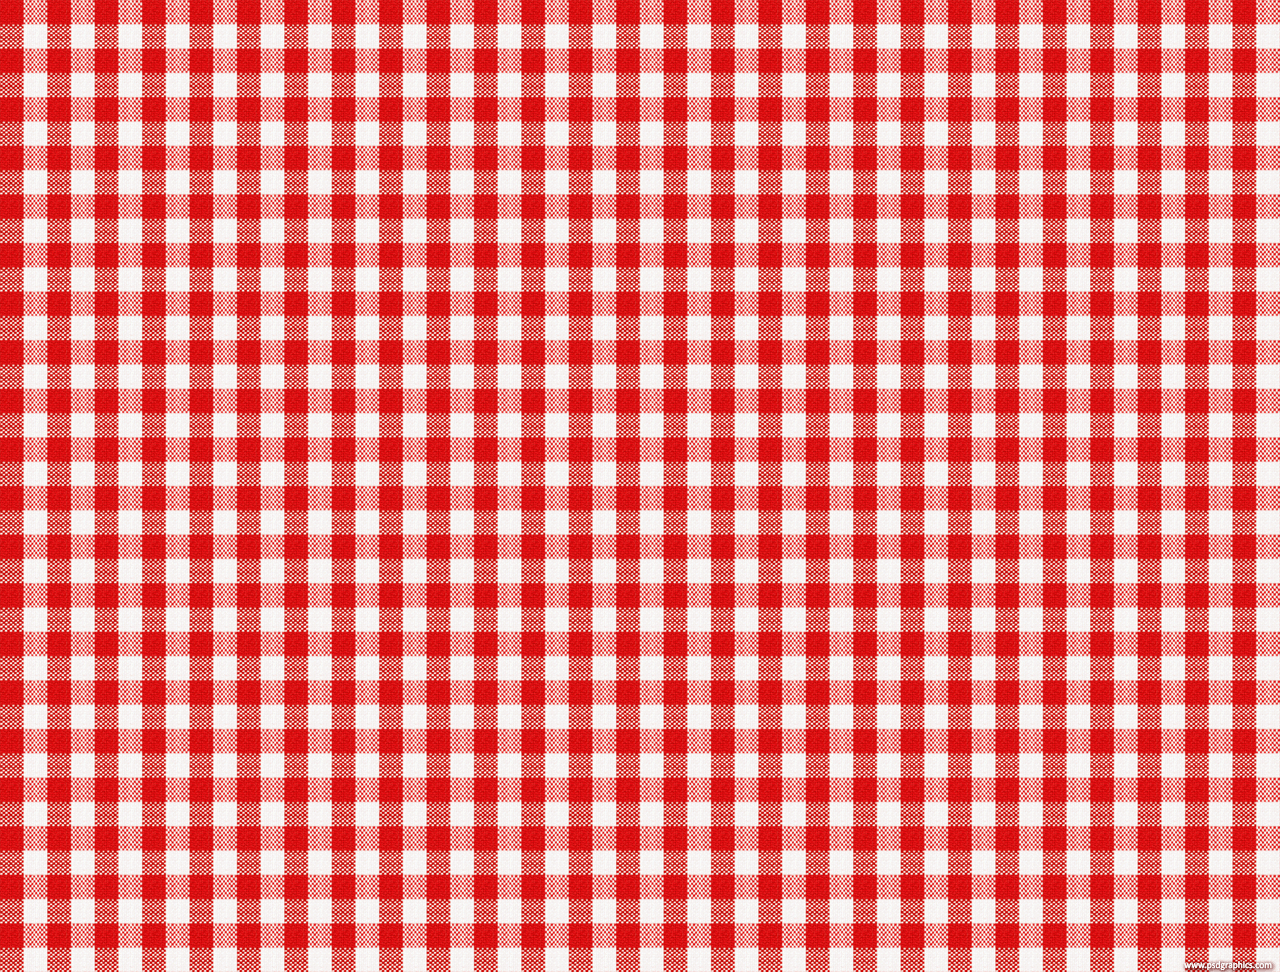 29+] Red and White Checkered Wallpaper - WallpaperSafari